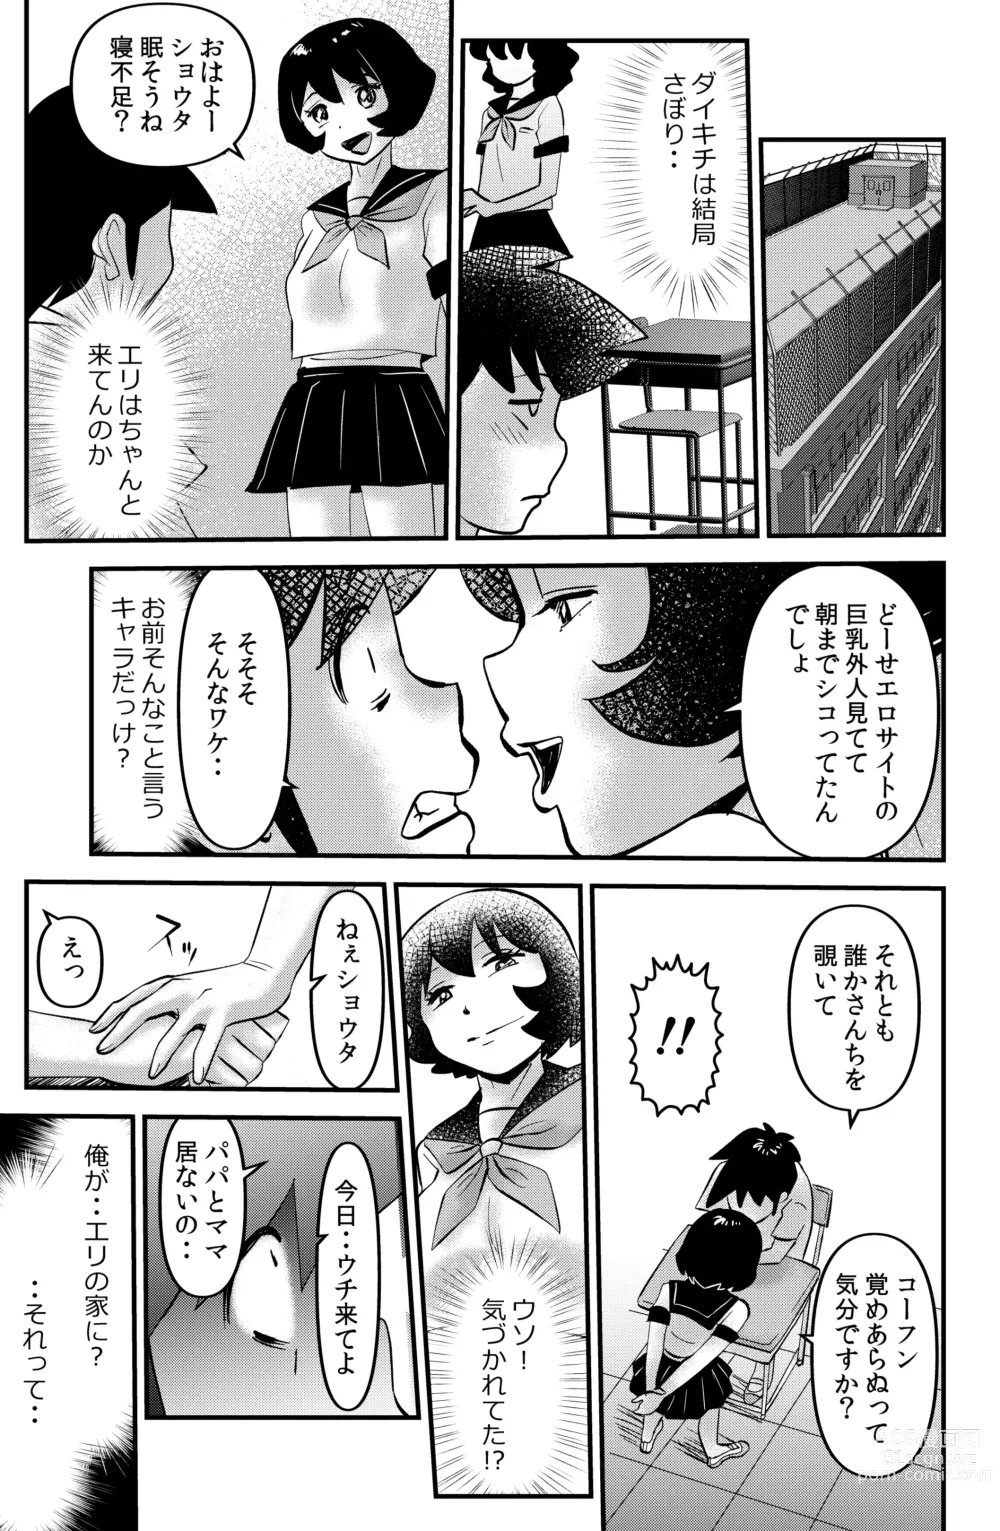 Page 15 of doujinshi Holy Shit!